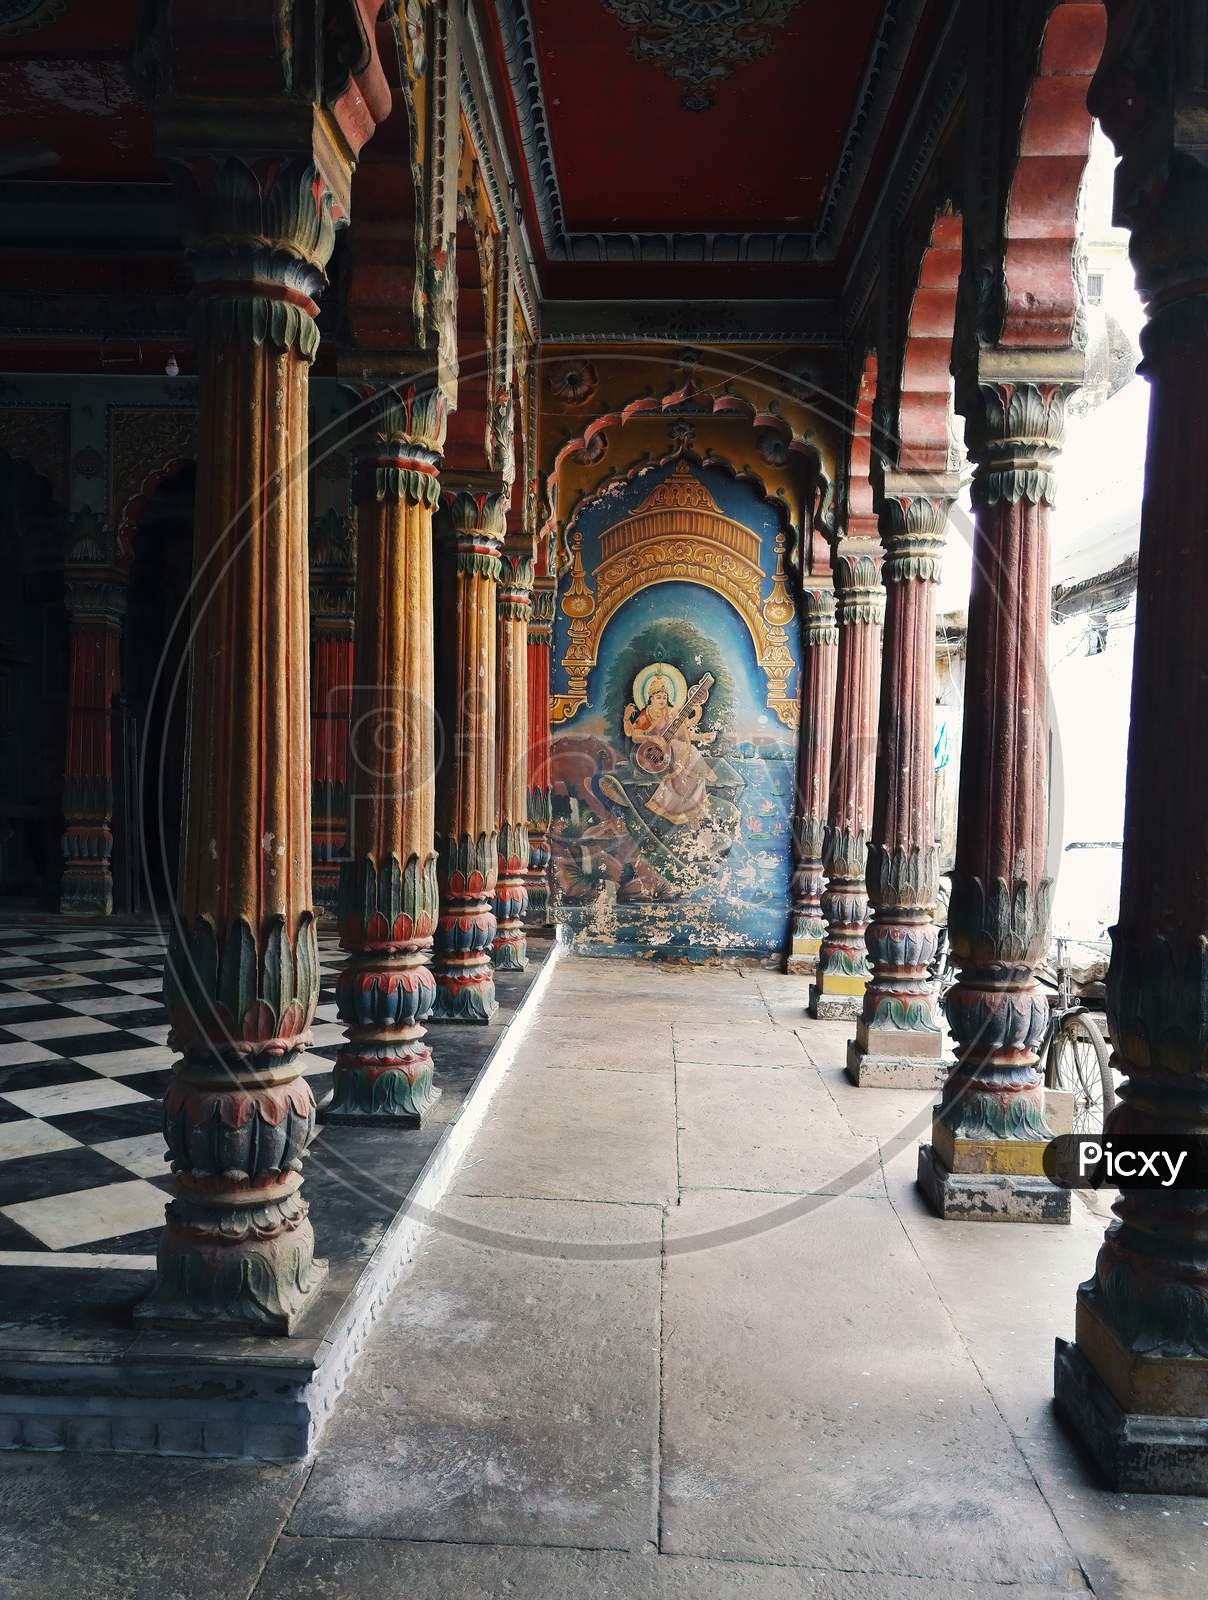 Varanasi, India - November 01, 2016: Interior Of An Empty Ancient Hindu Temple With Stone Carved Design, Pillars With Checker Marble Floor And An Image Of Saraswati Goddess On Wall . Uttar Pradesh.